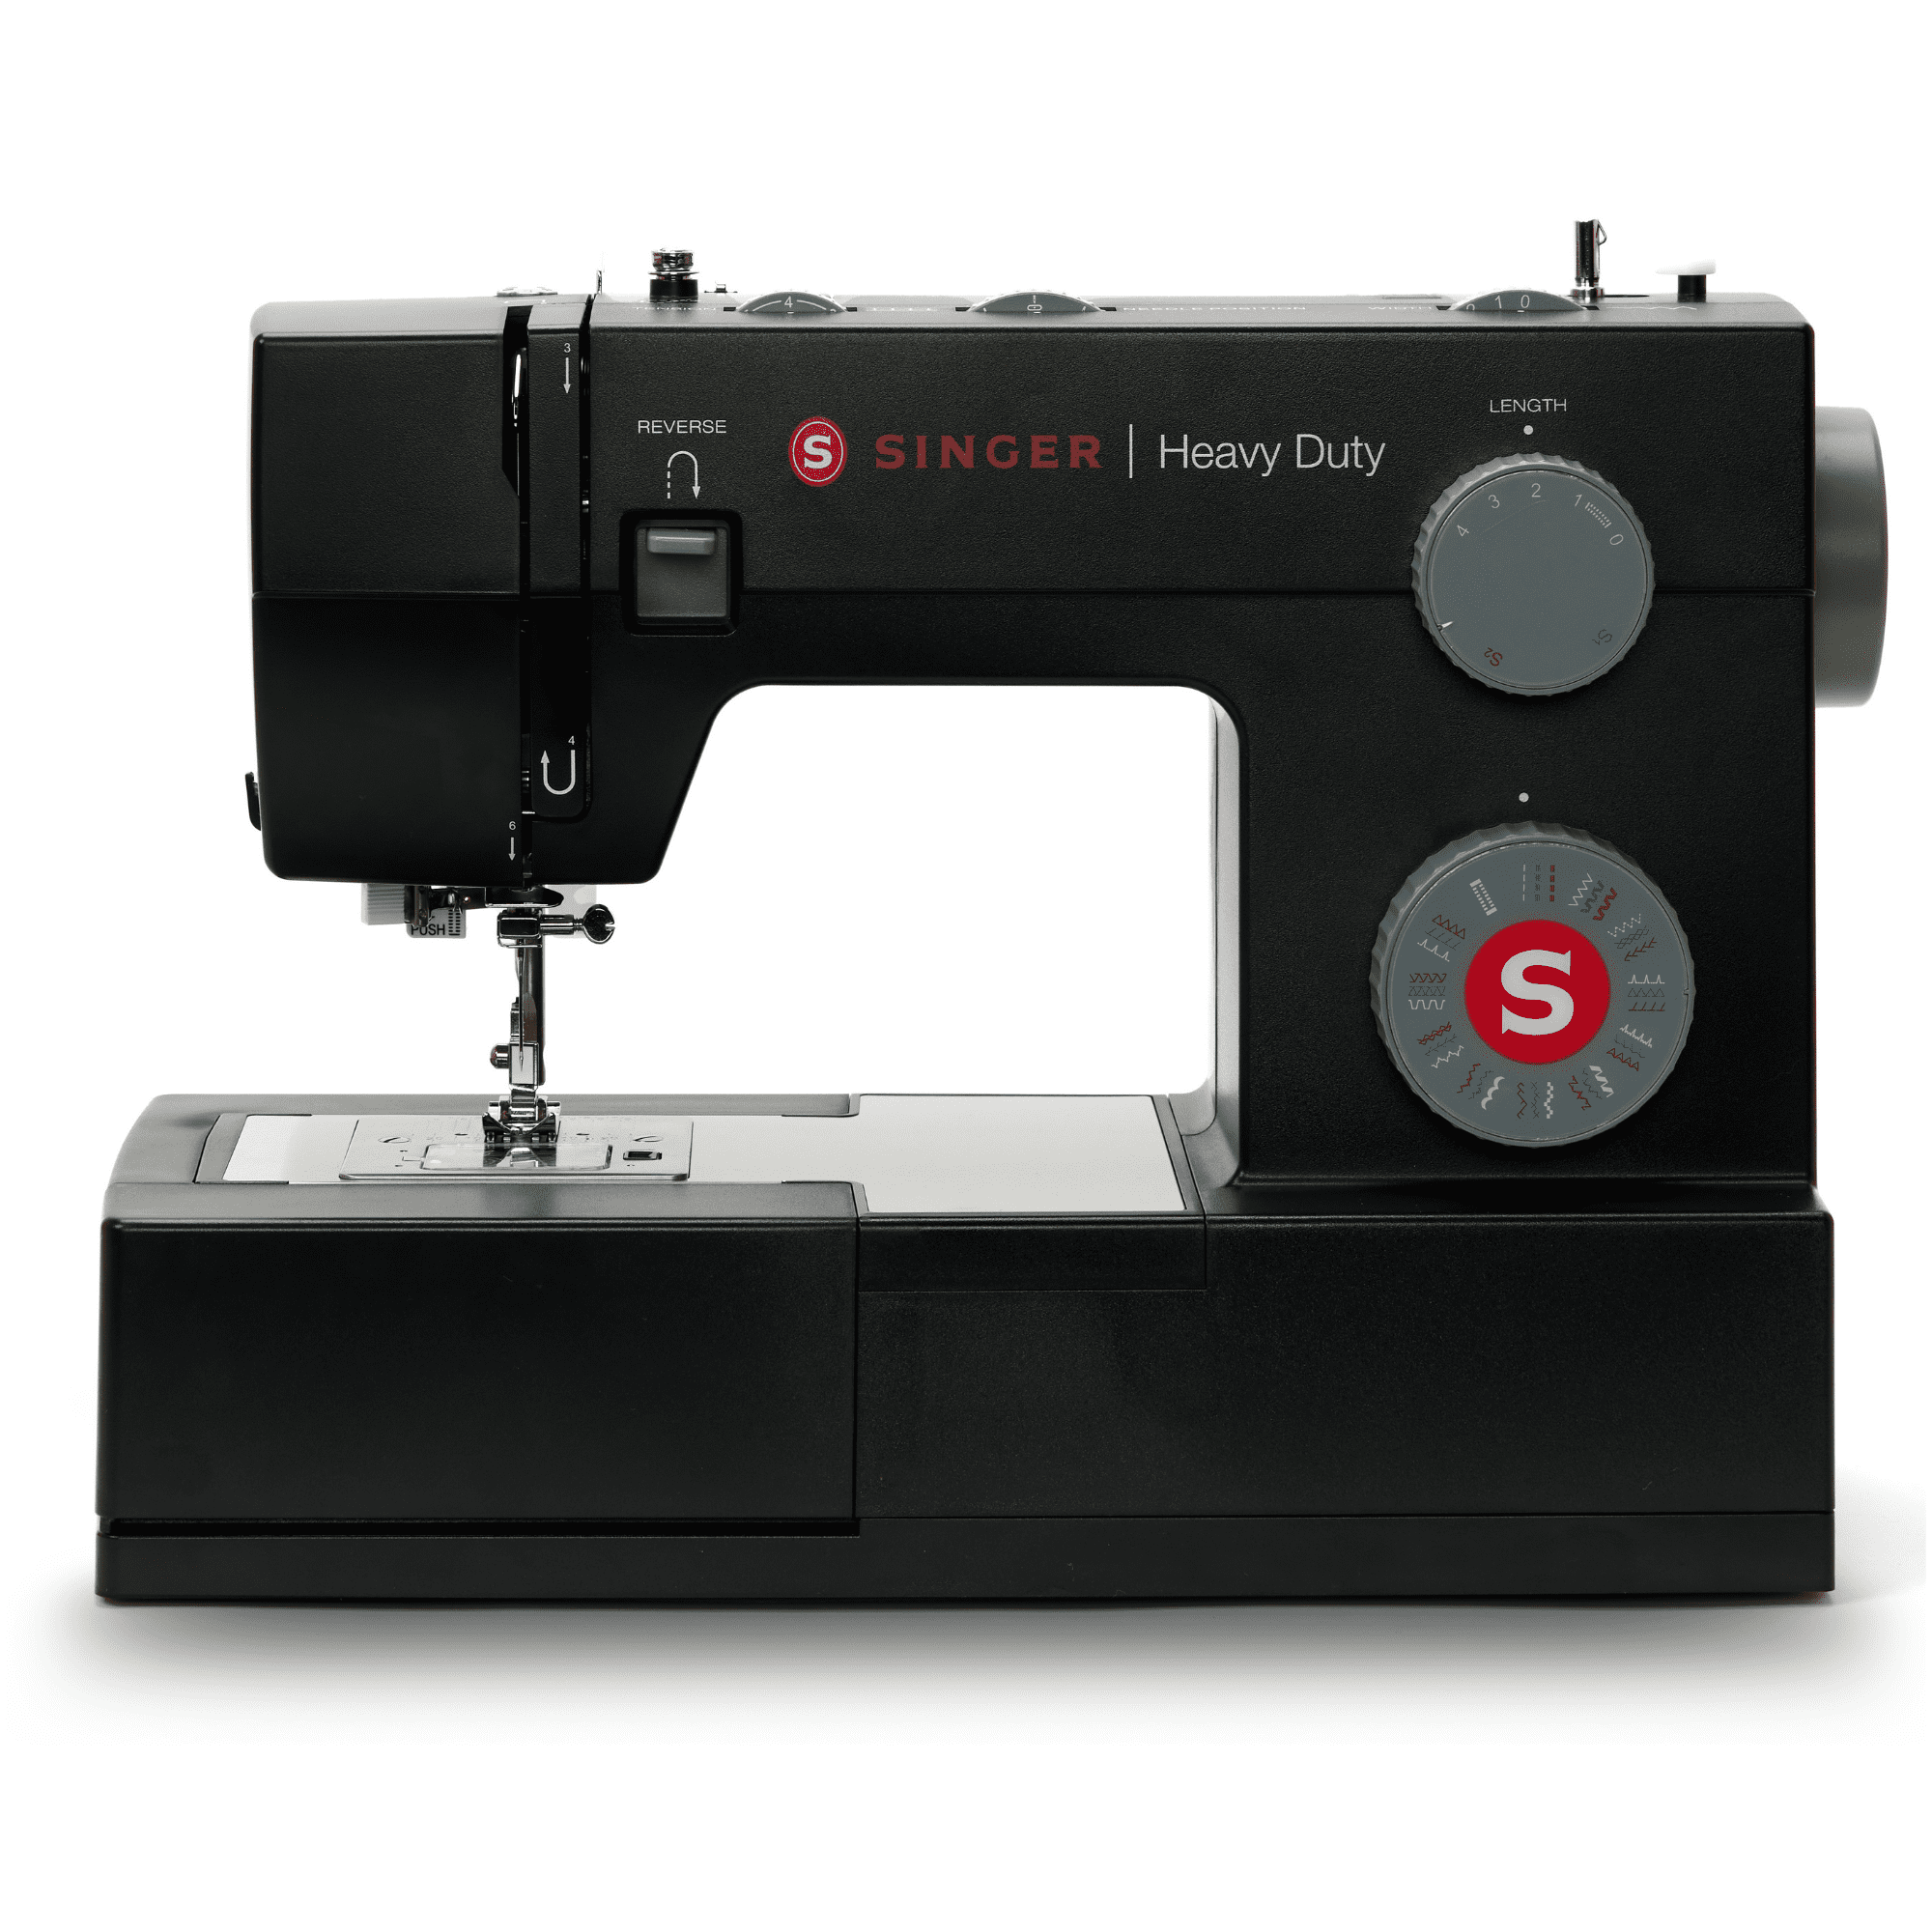  SINGER  Heavy Duty 4423 Sewing Machine